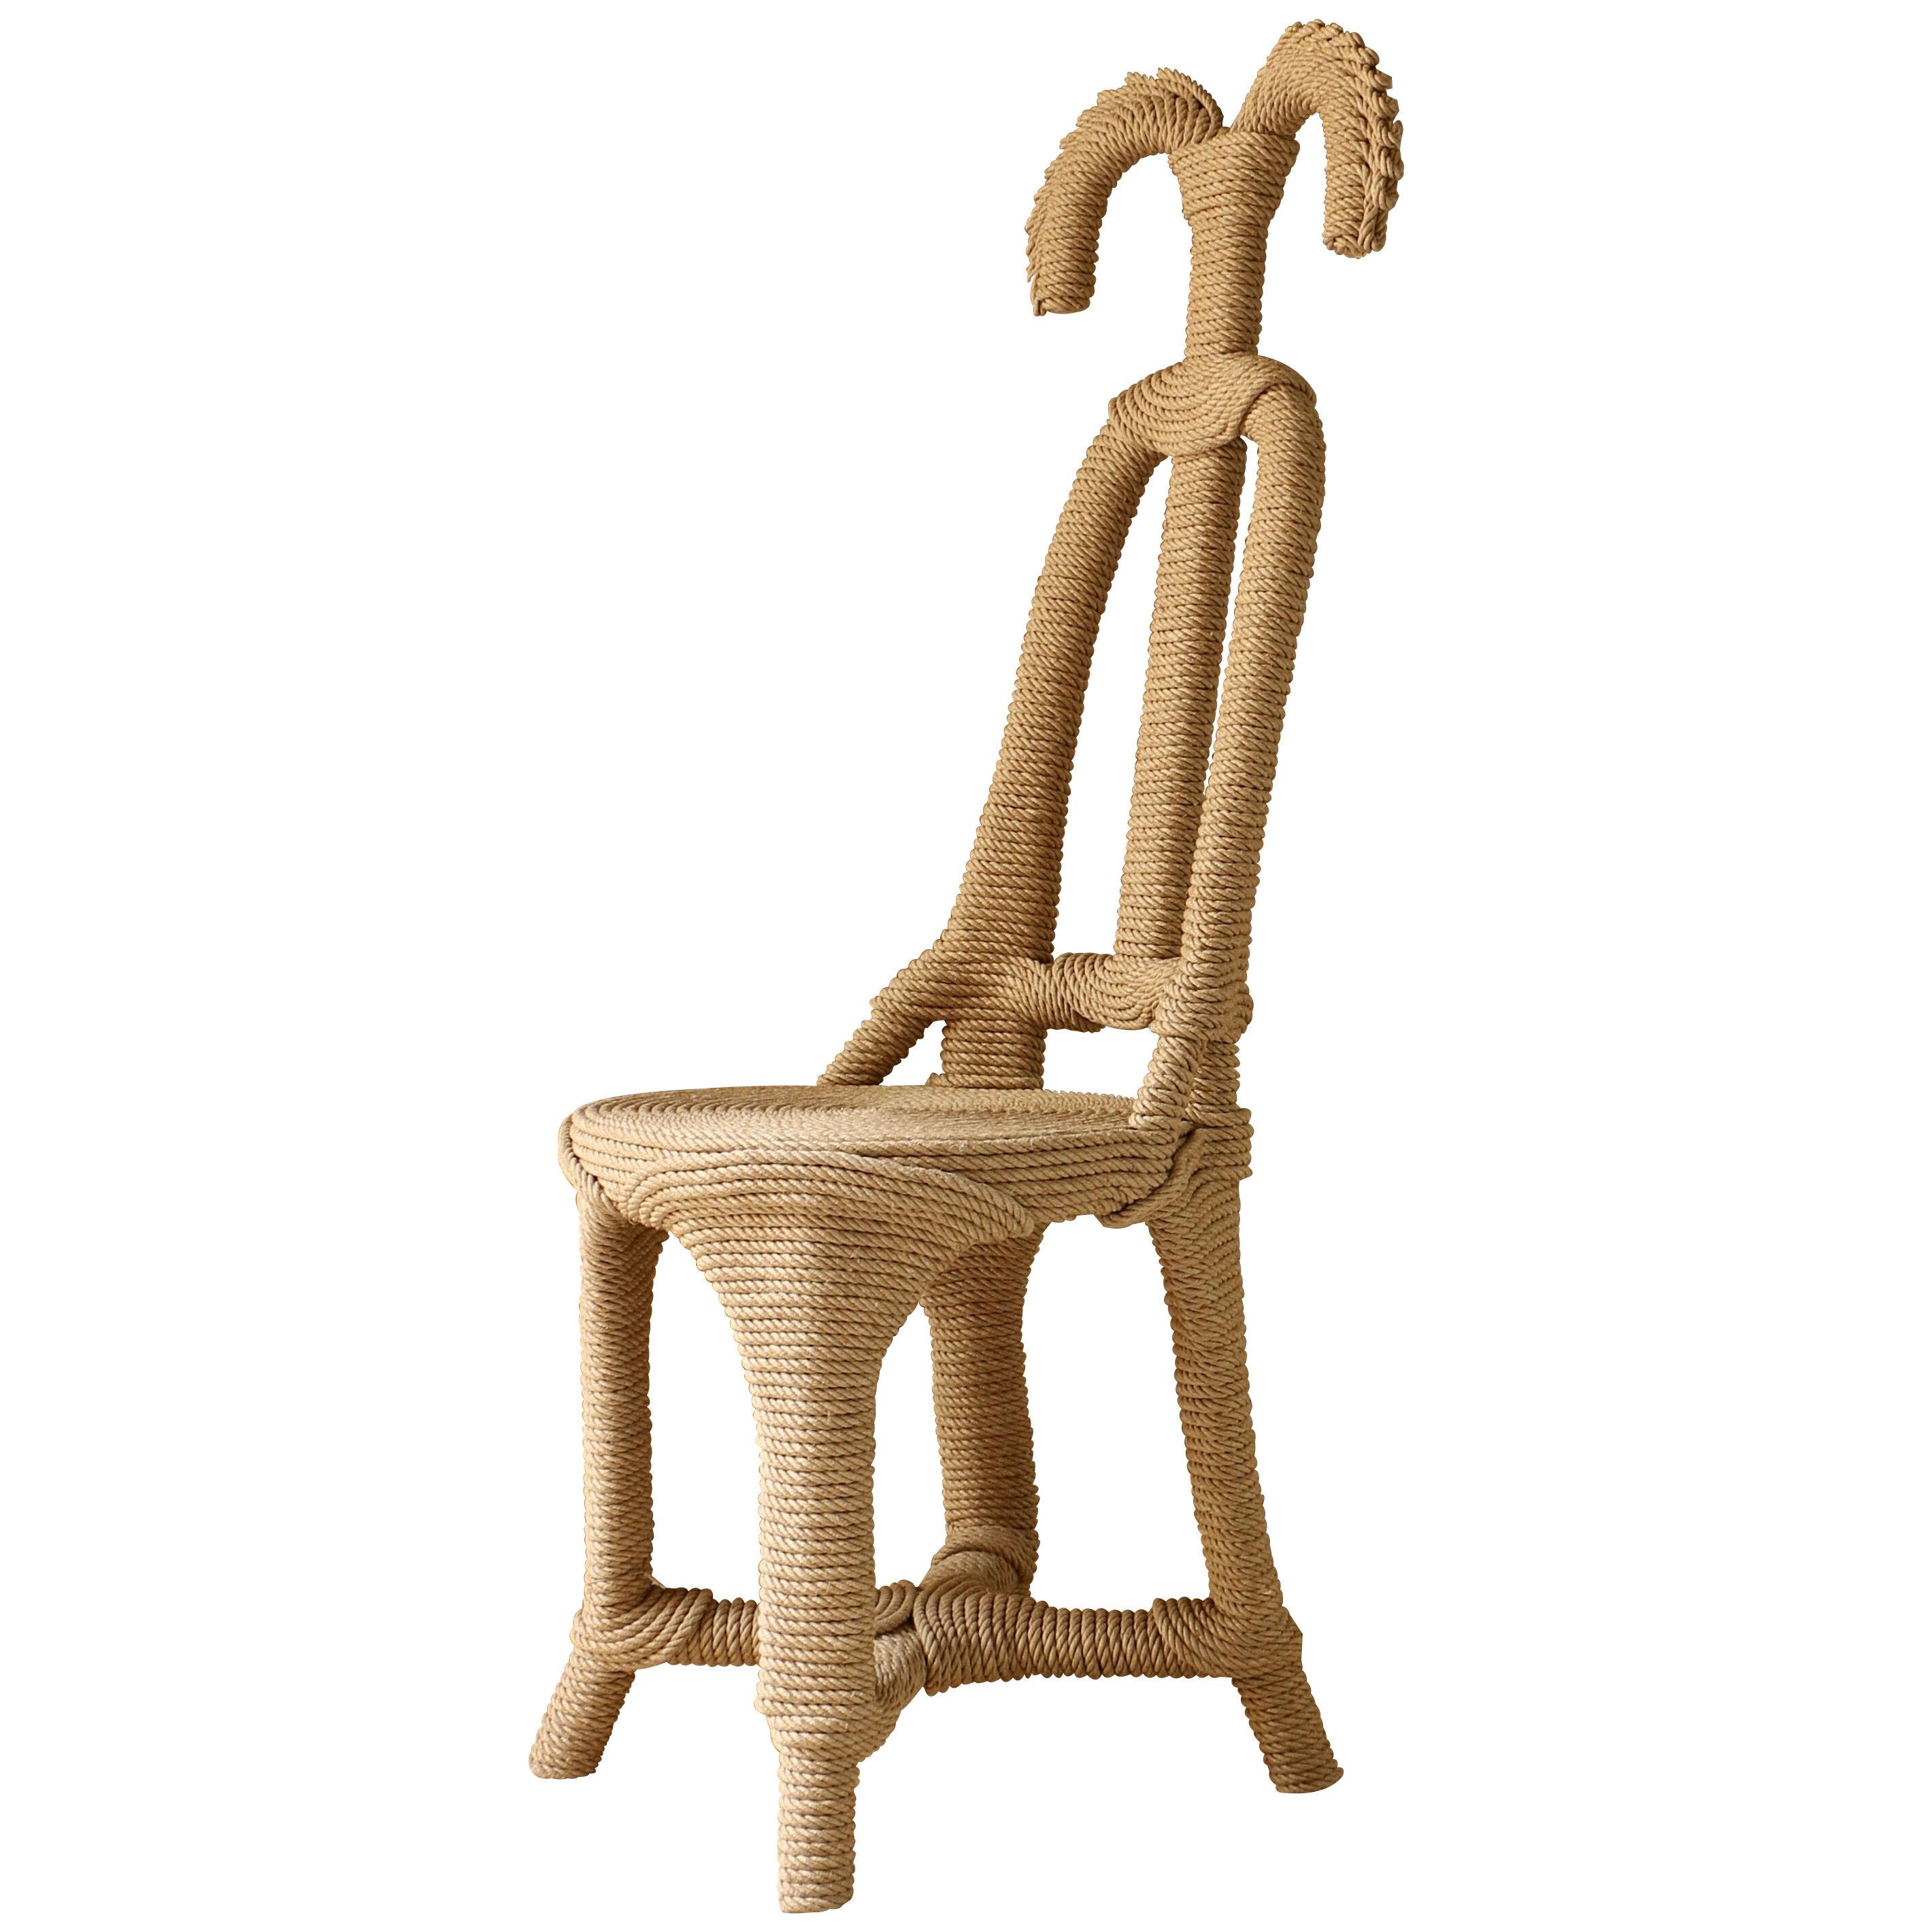 MOISTE Chair - Christian Astuguevieille